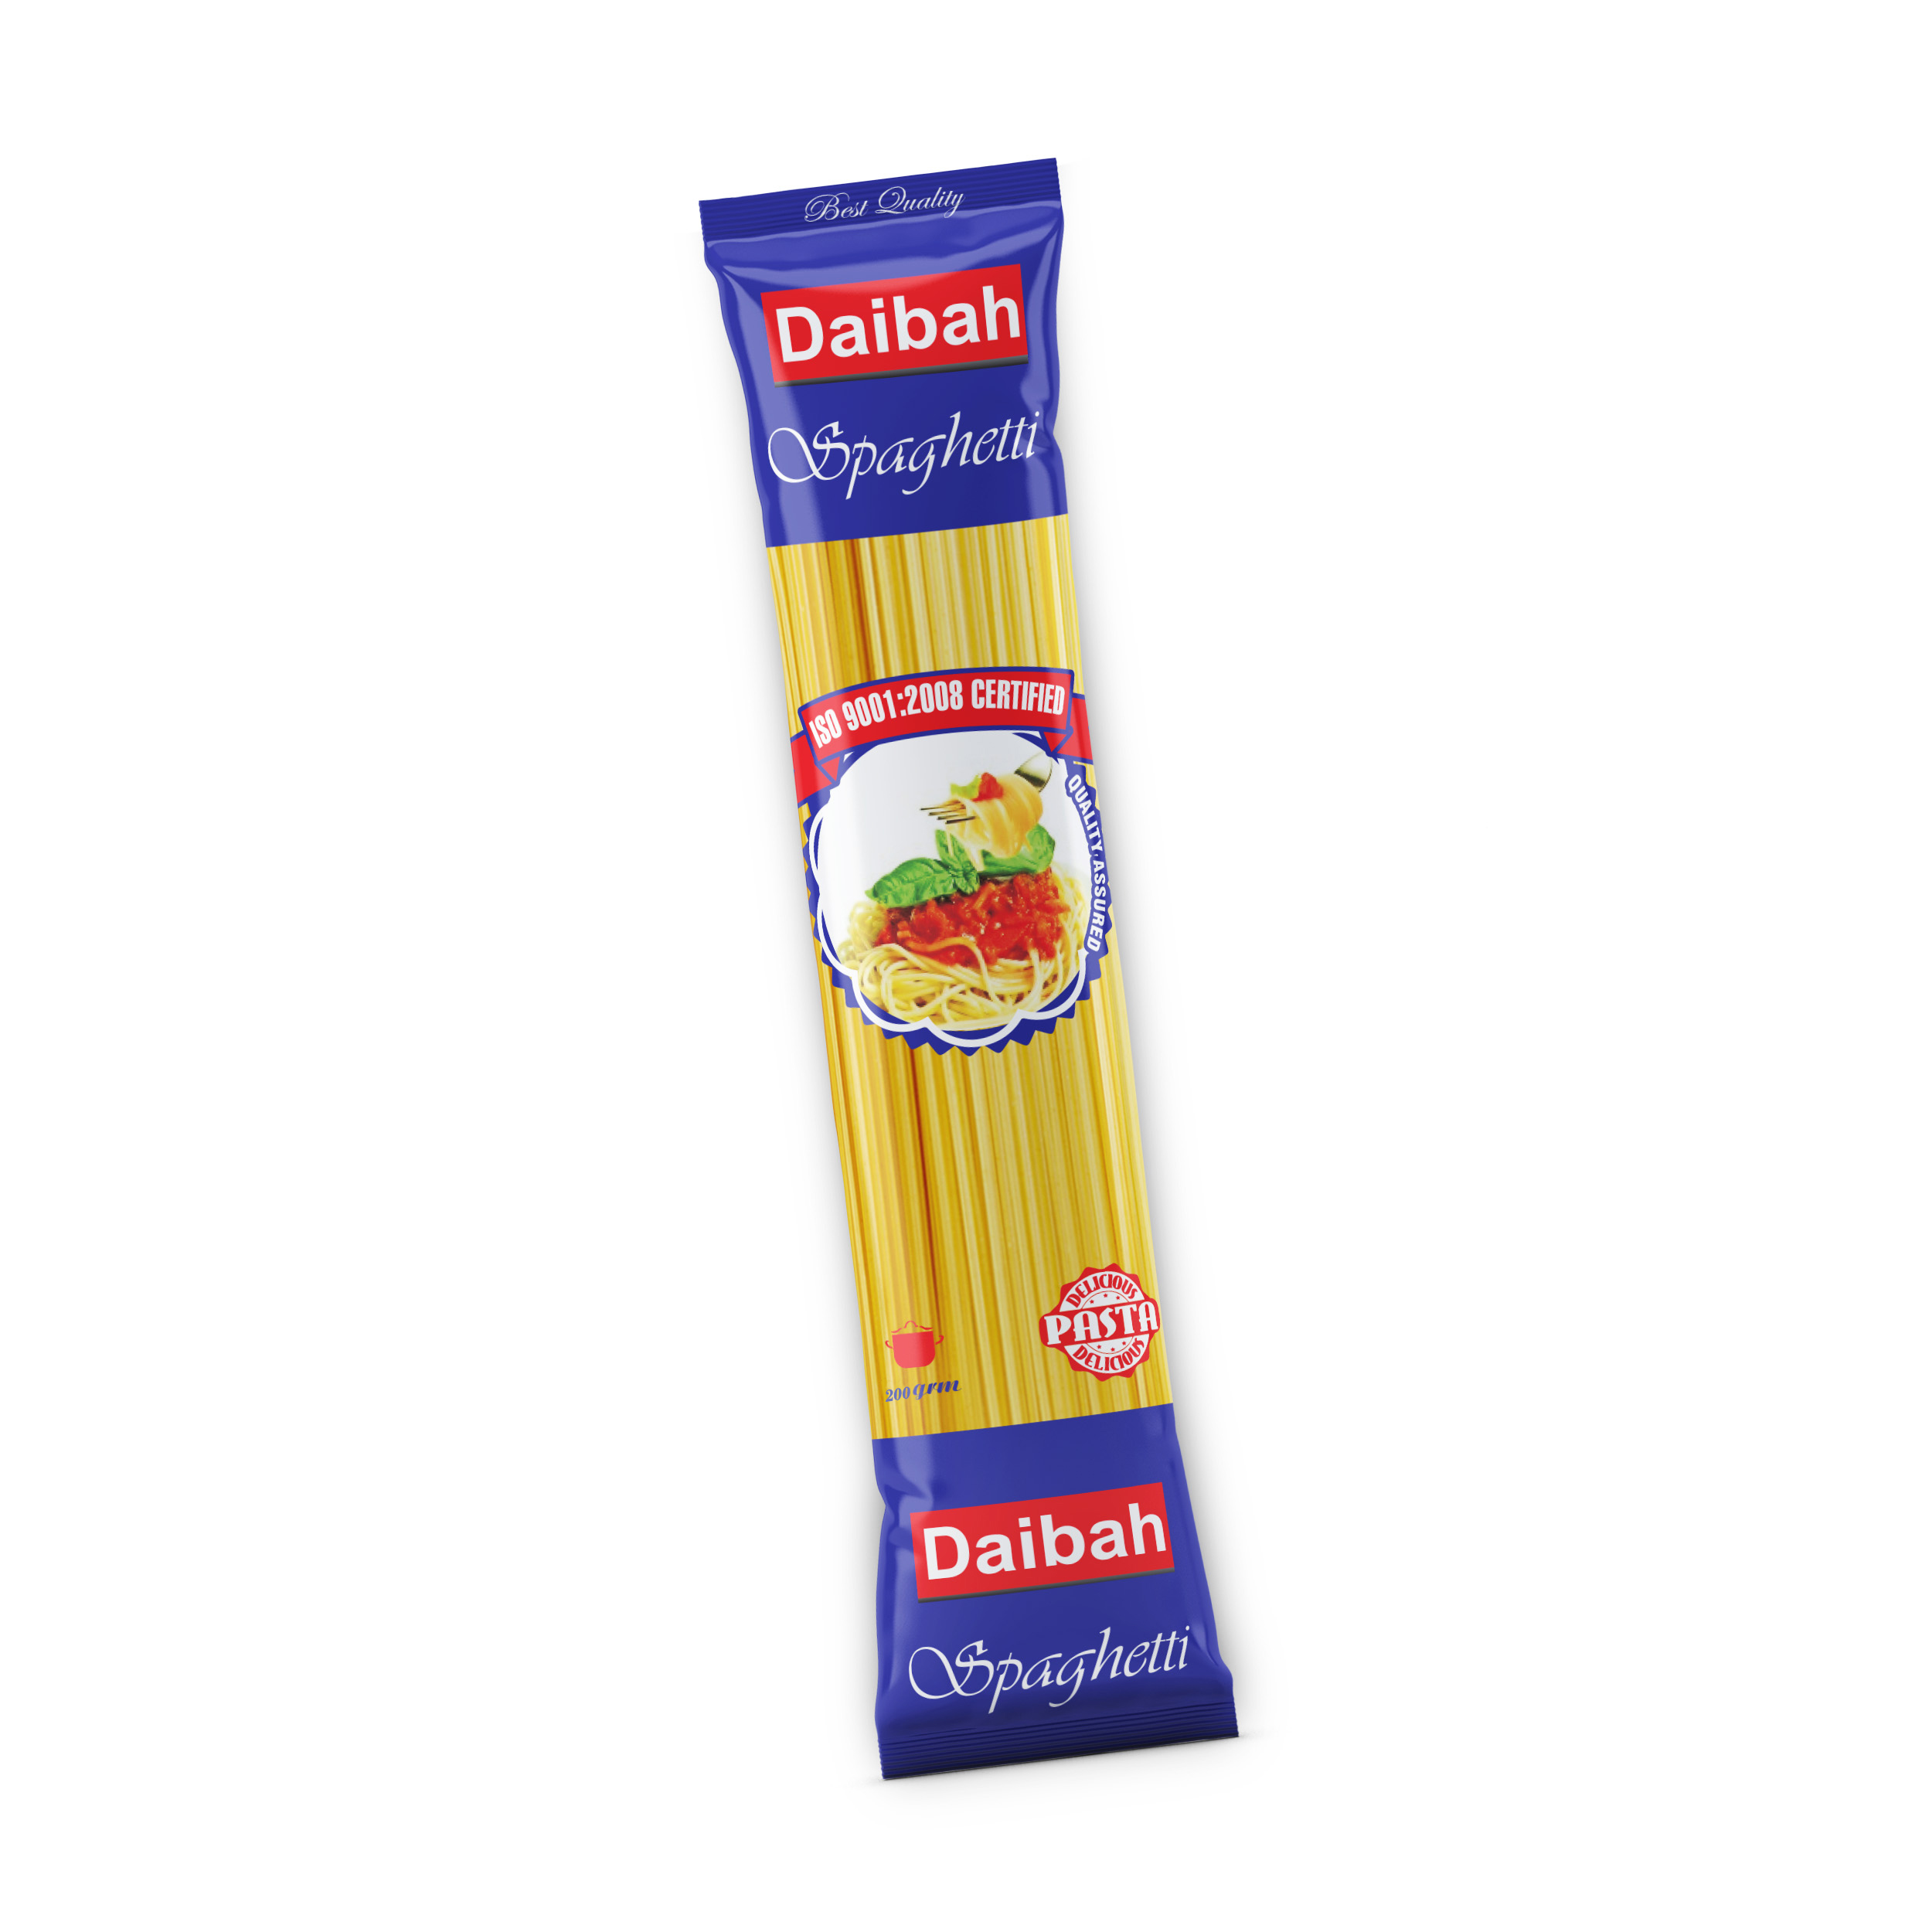 pasta spaghetti 200 gm Brand / Fast move package